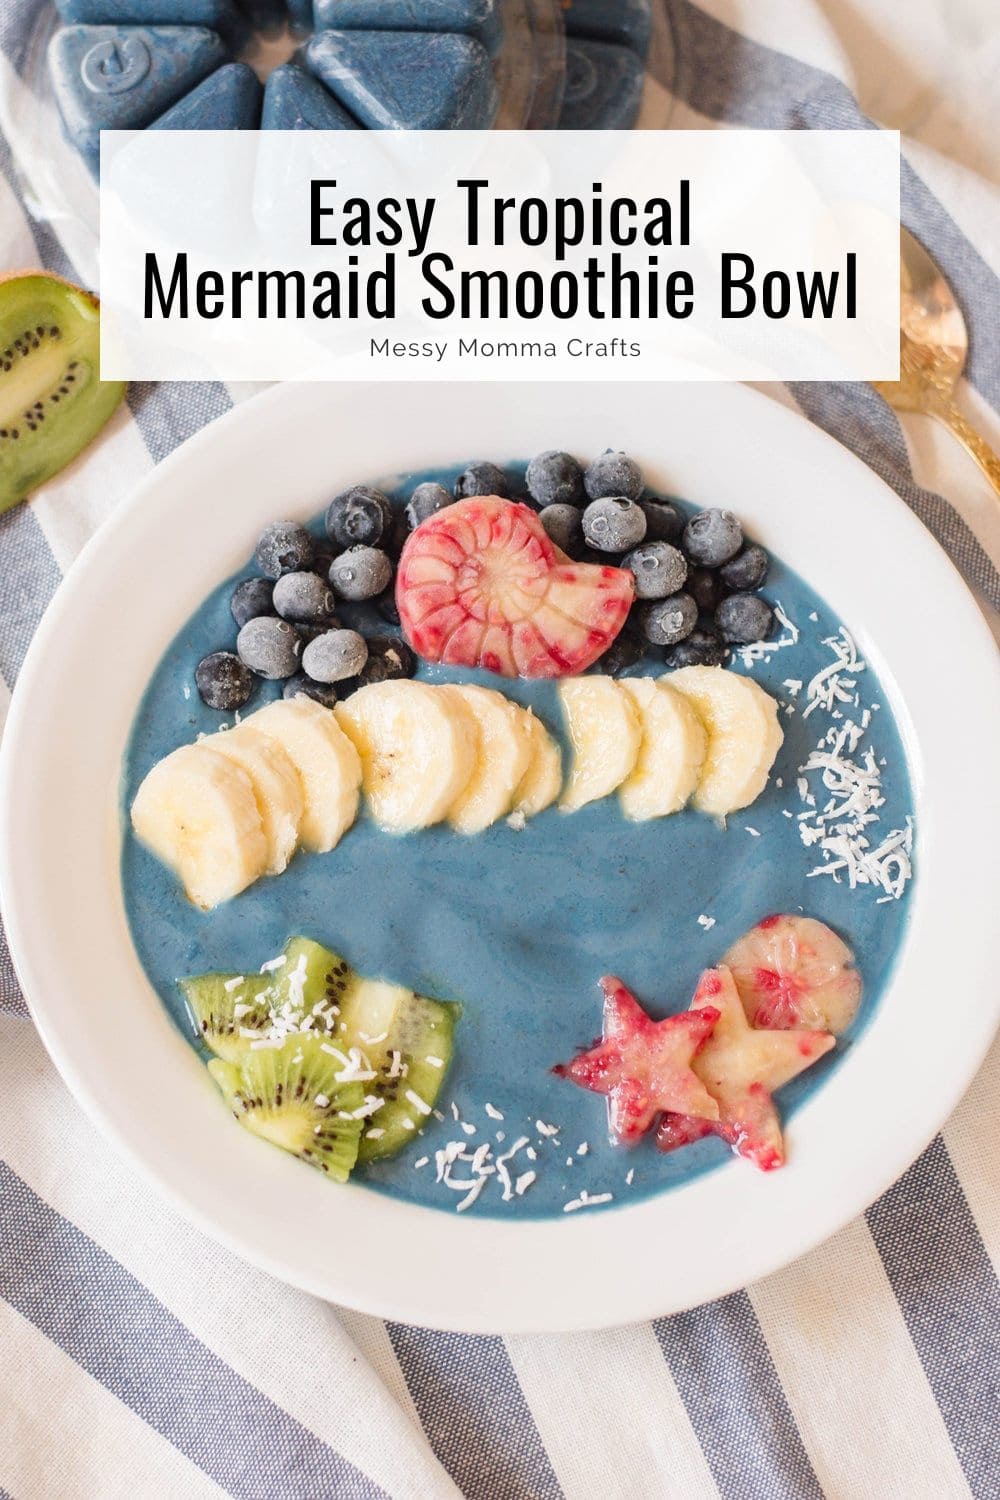 Easy tropical mermaid smoothie bowl.